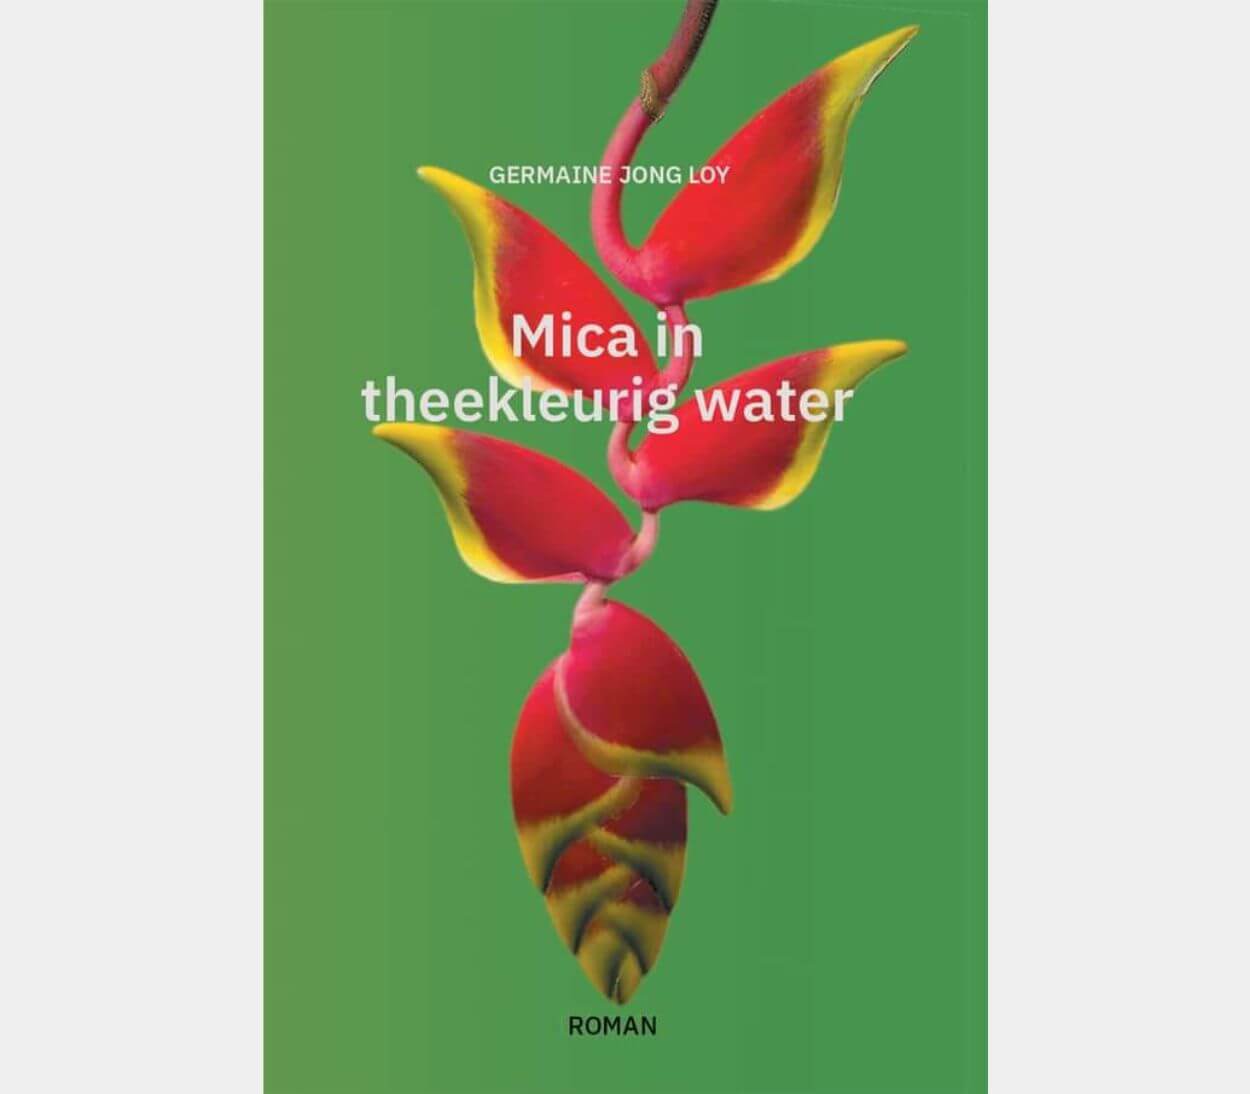 Cover van 'Mica in theekleurig water' - Germaine Jong Loy.